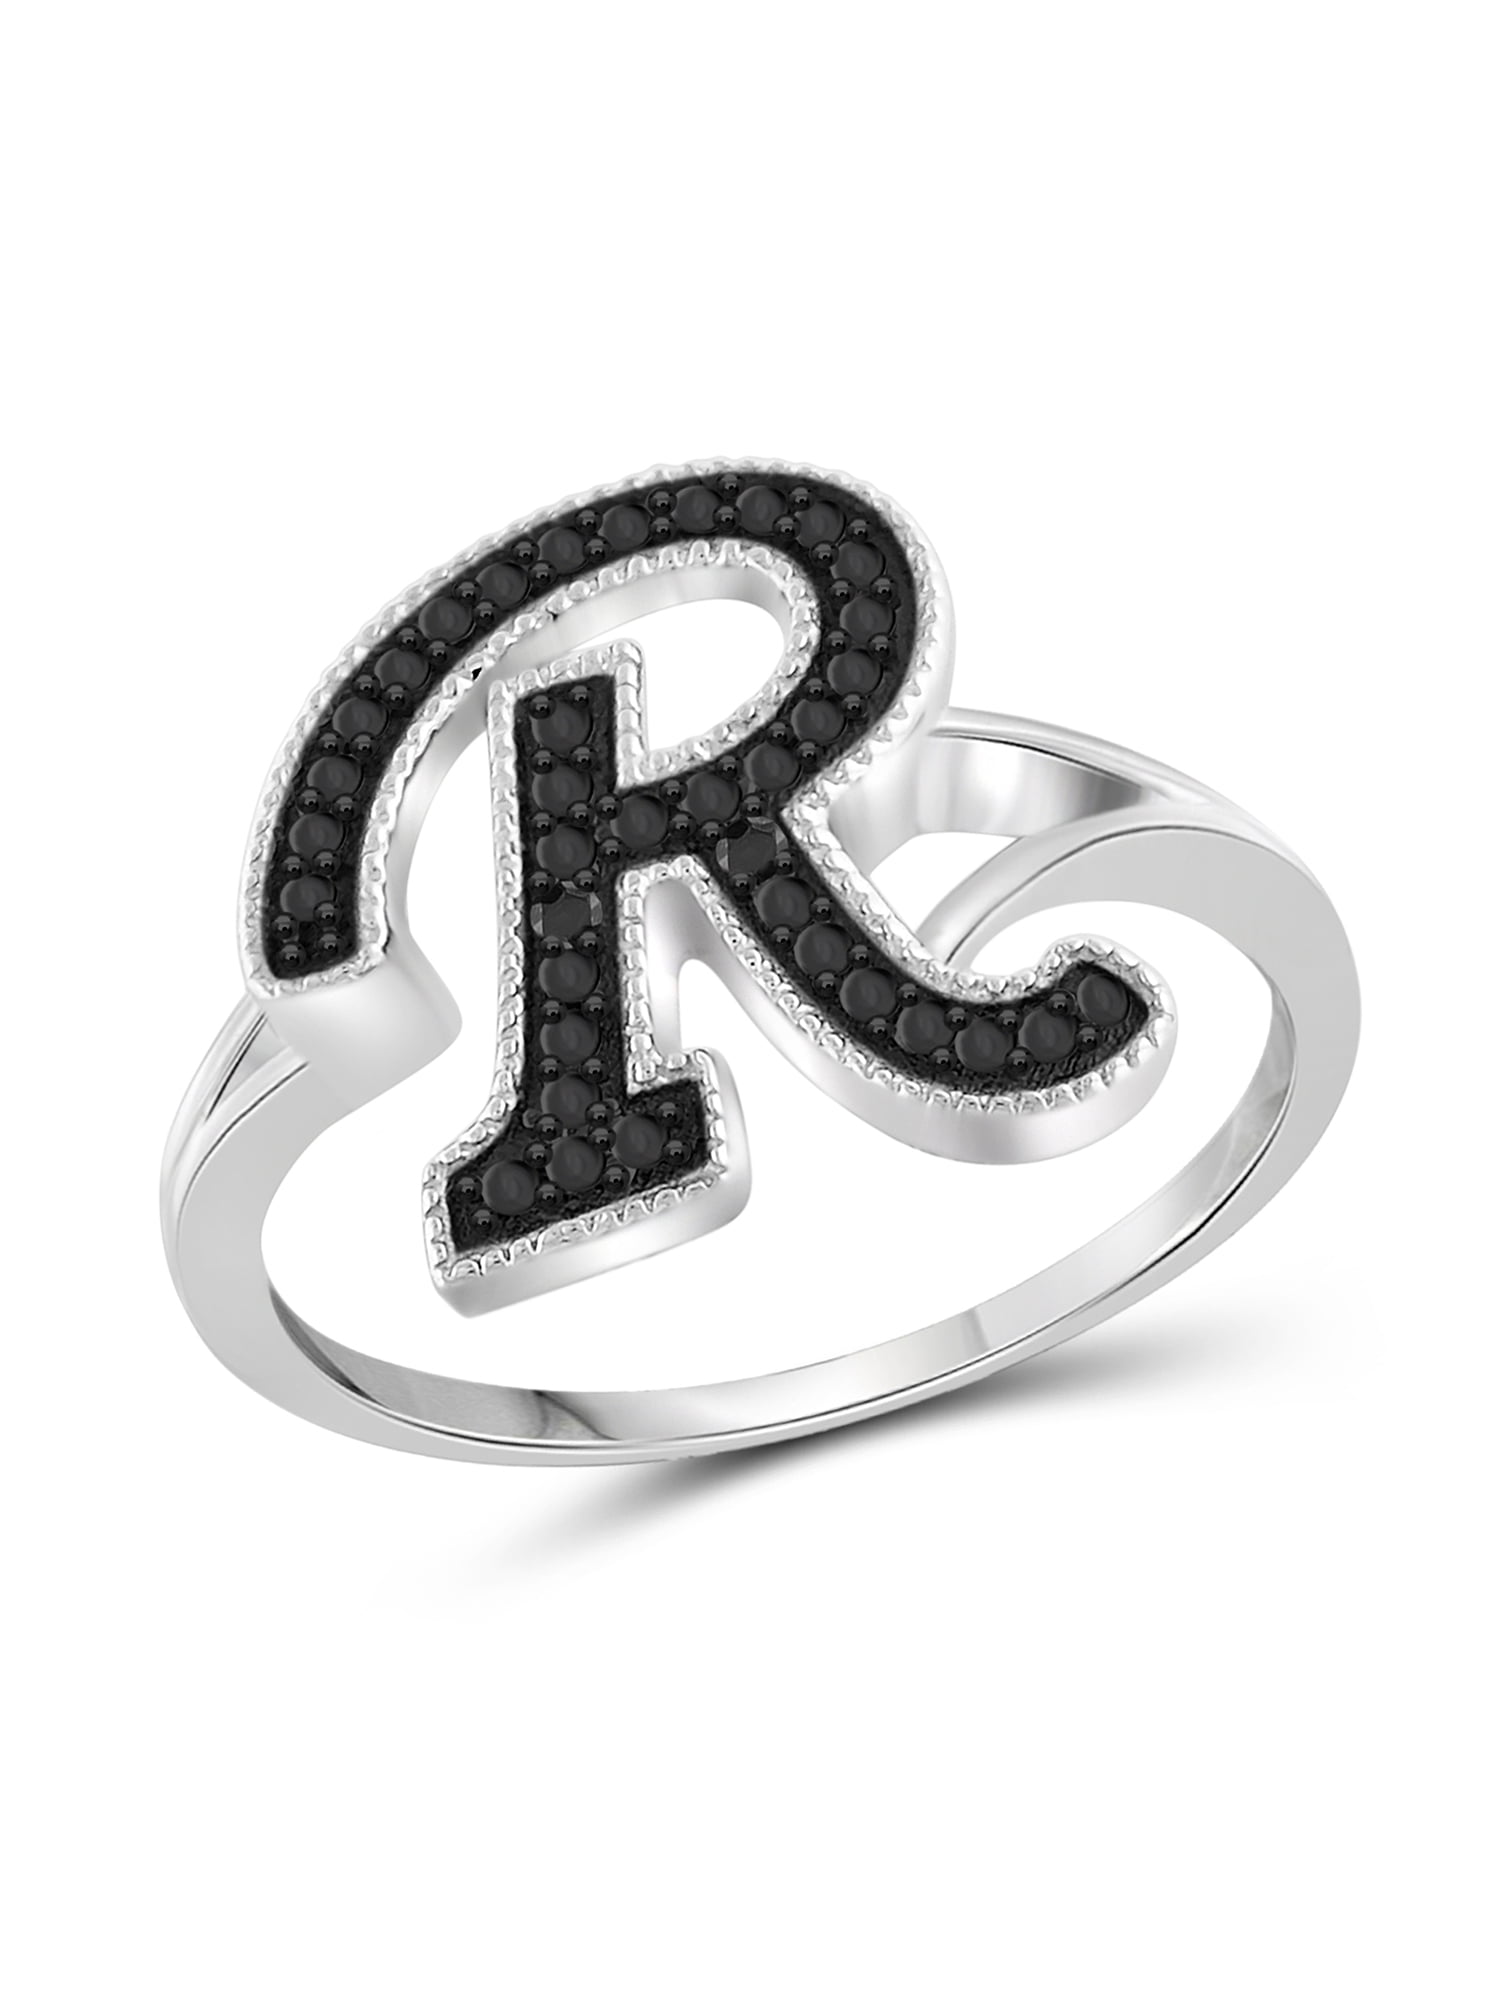 Gold Initial R Ring | Gold initial ring, Gold initial, Initial ring